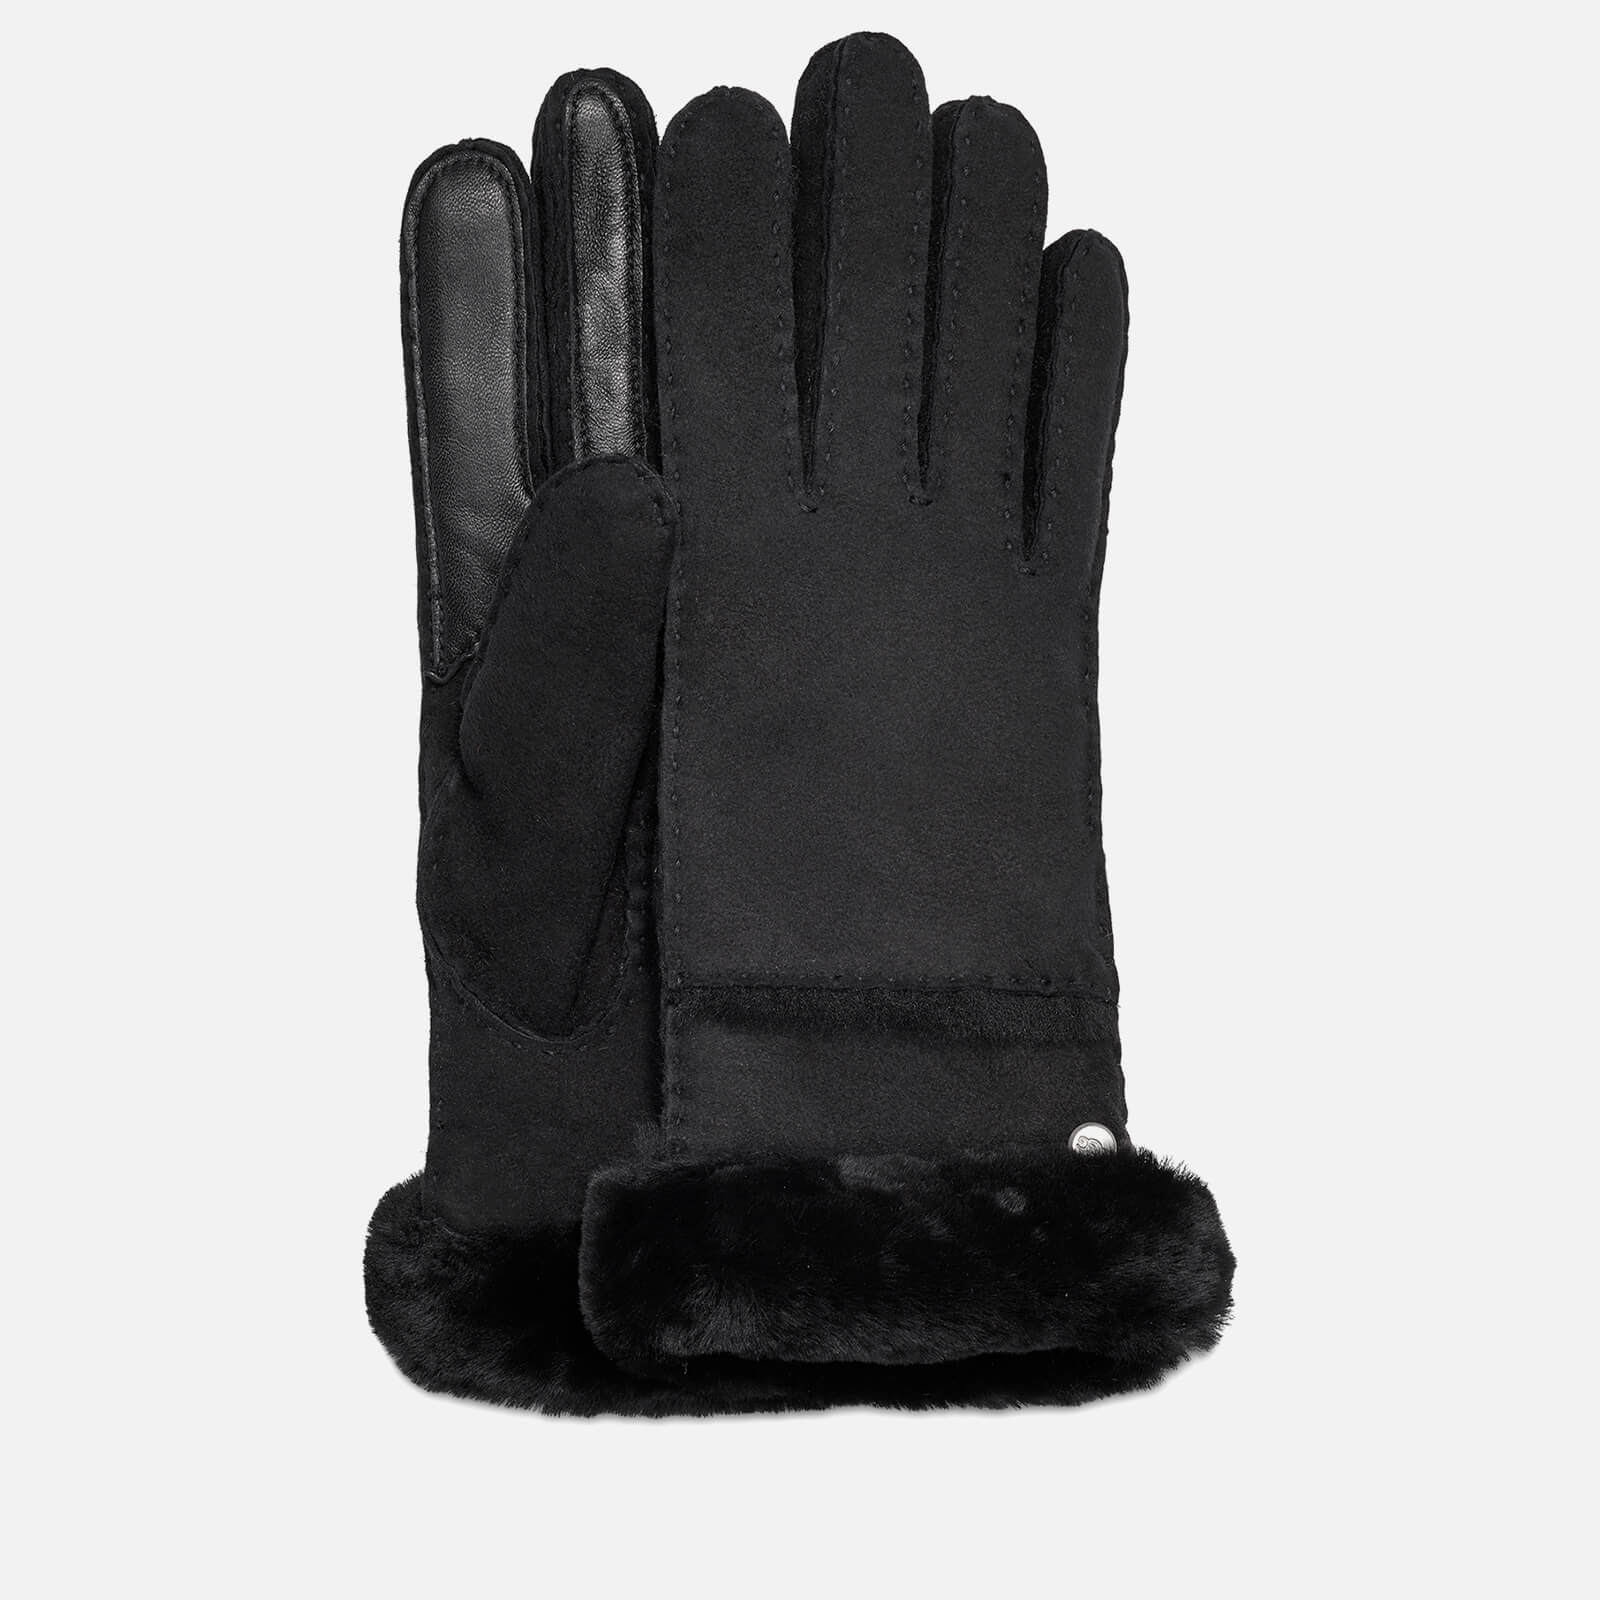 UGG Women's Seamed Tech Glove - Black - L